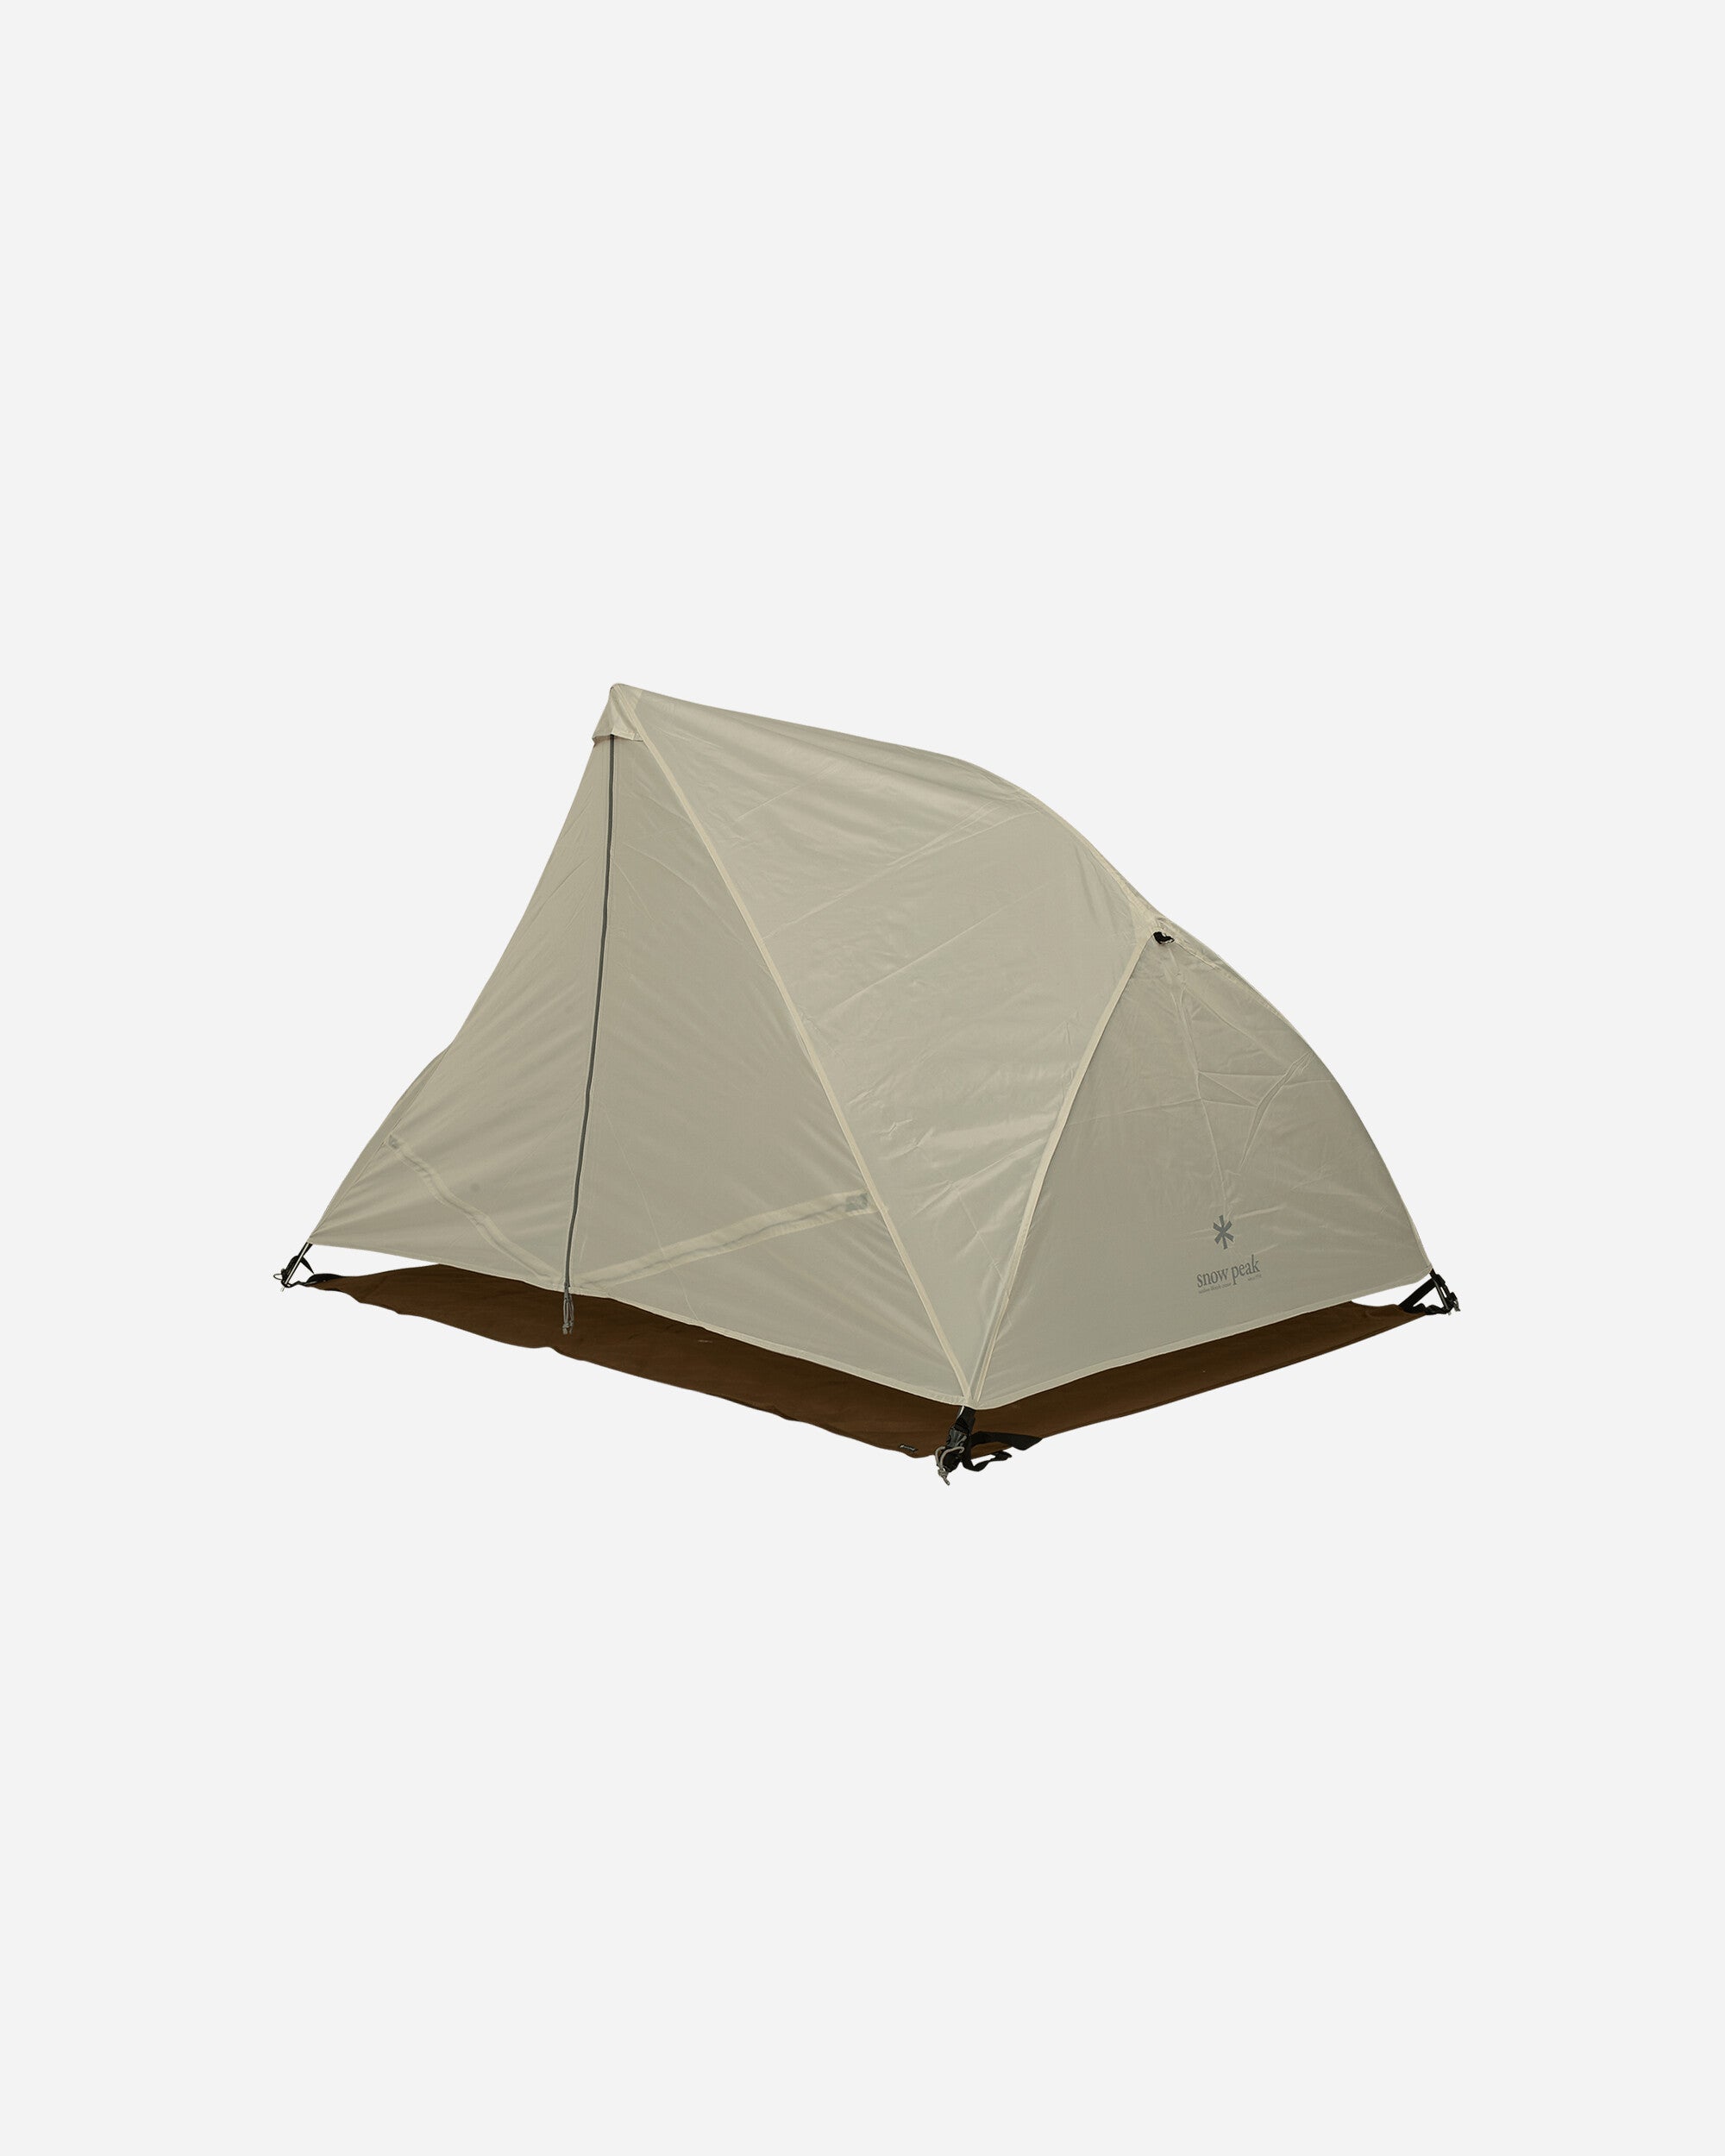 Snow Peak Toya 2 Shelter Ivory Equipment Tents SD-180 1